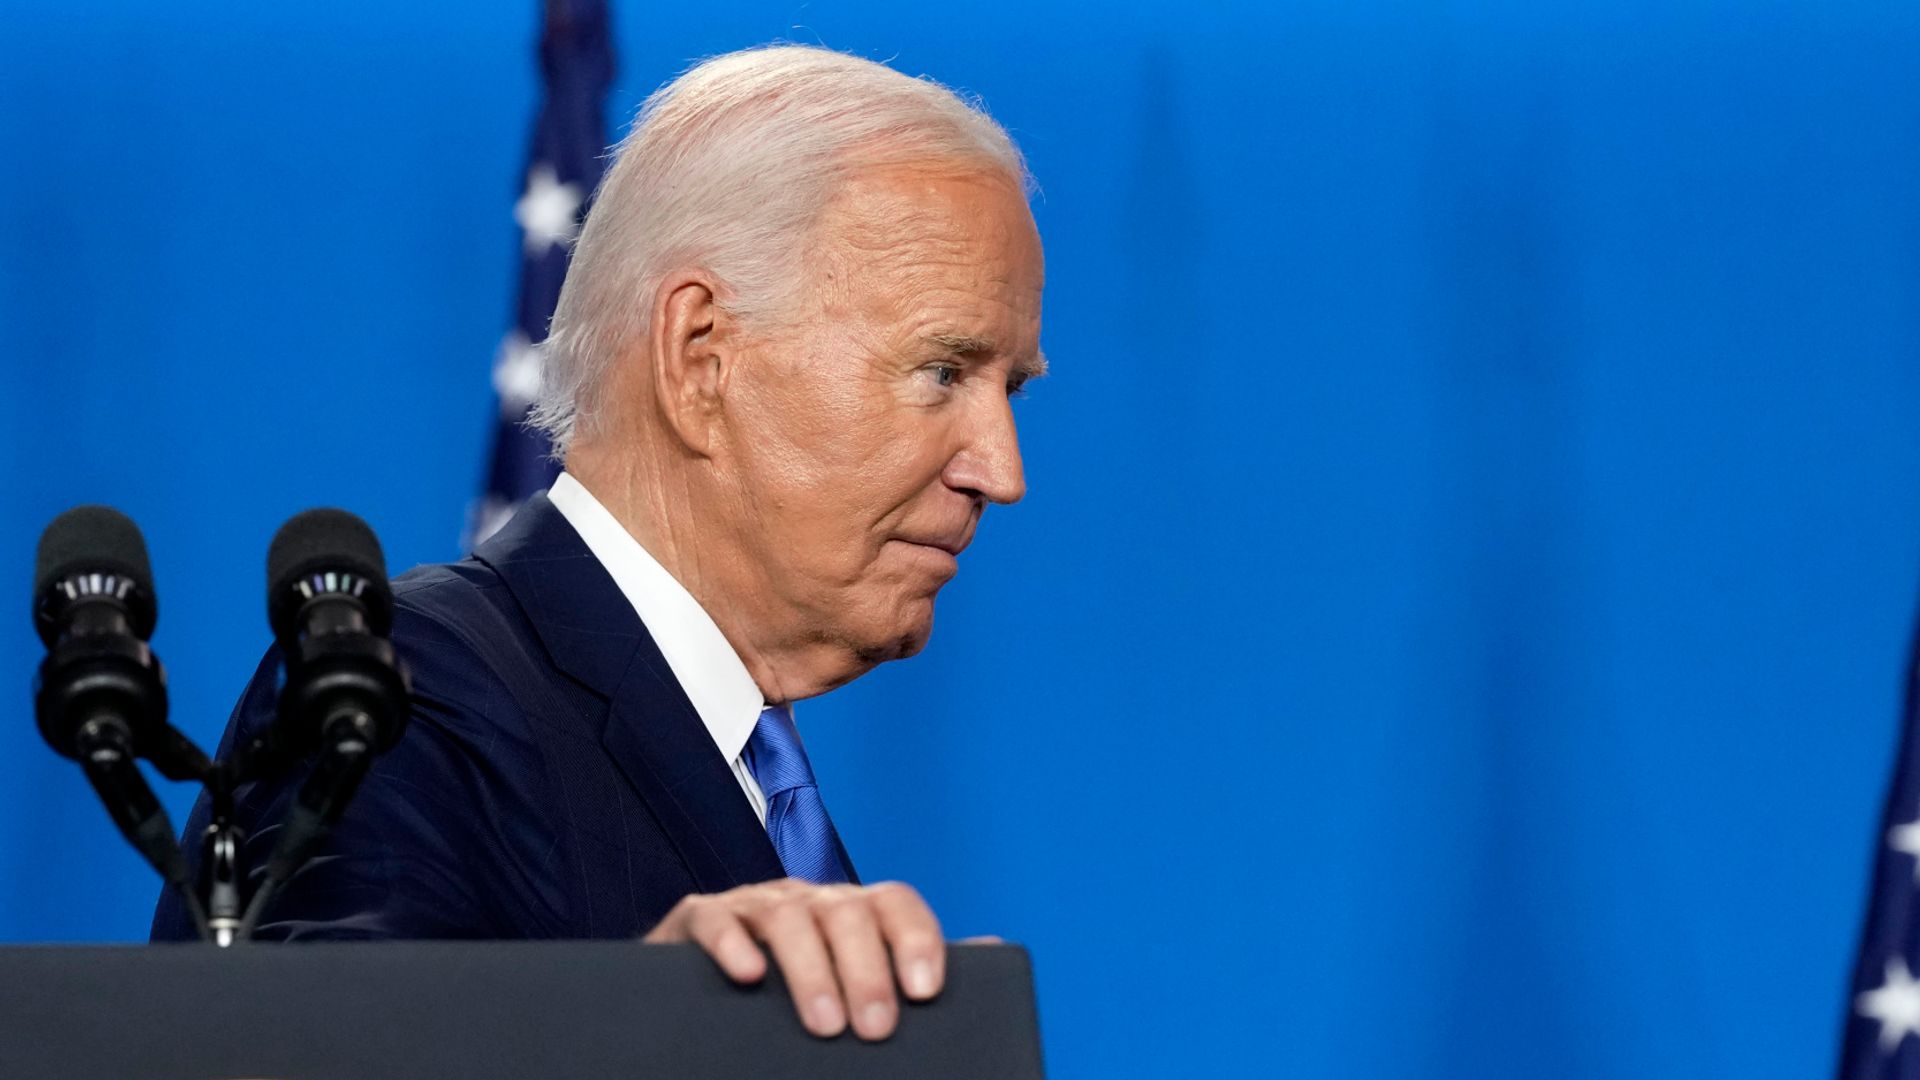 Biden blew NATO summit reset moment with 'meme-tastic' Putin gaffe